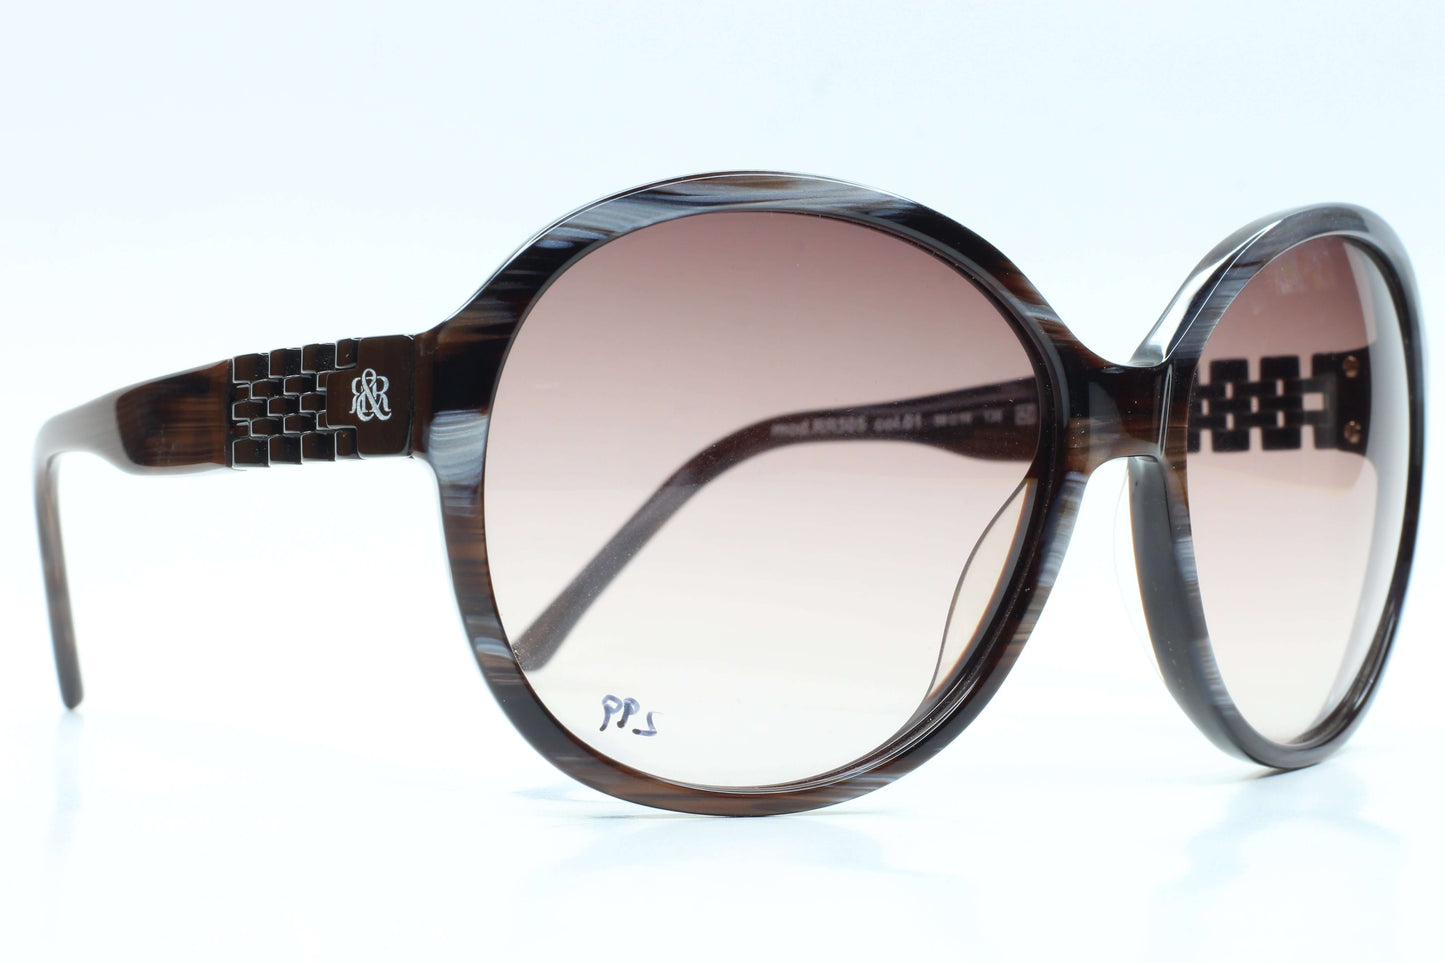 Rock & Republic RR505 col.01 Brown Oversized Sunglasses